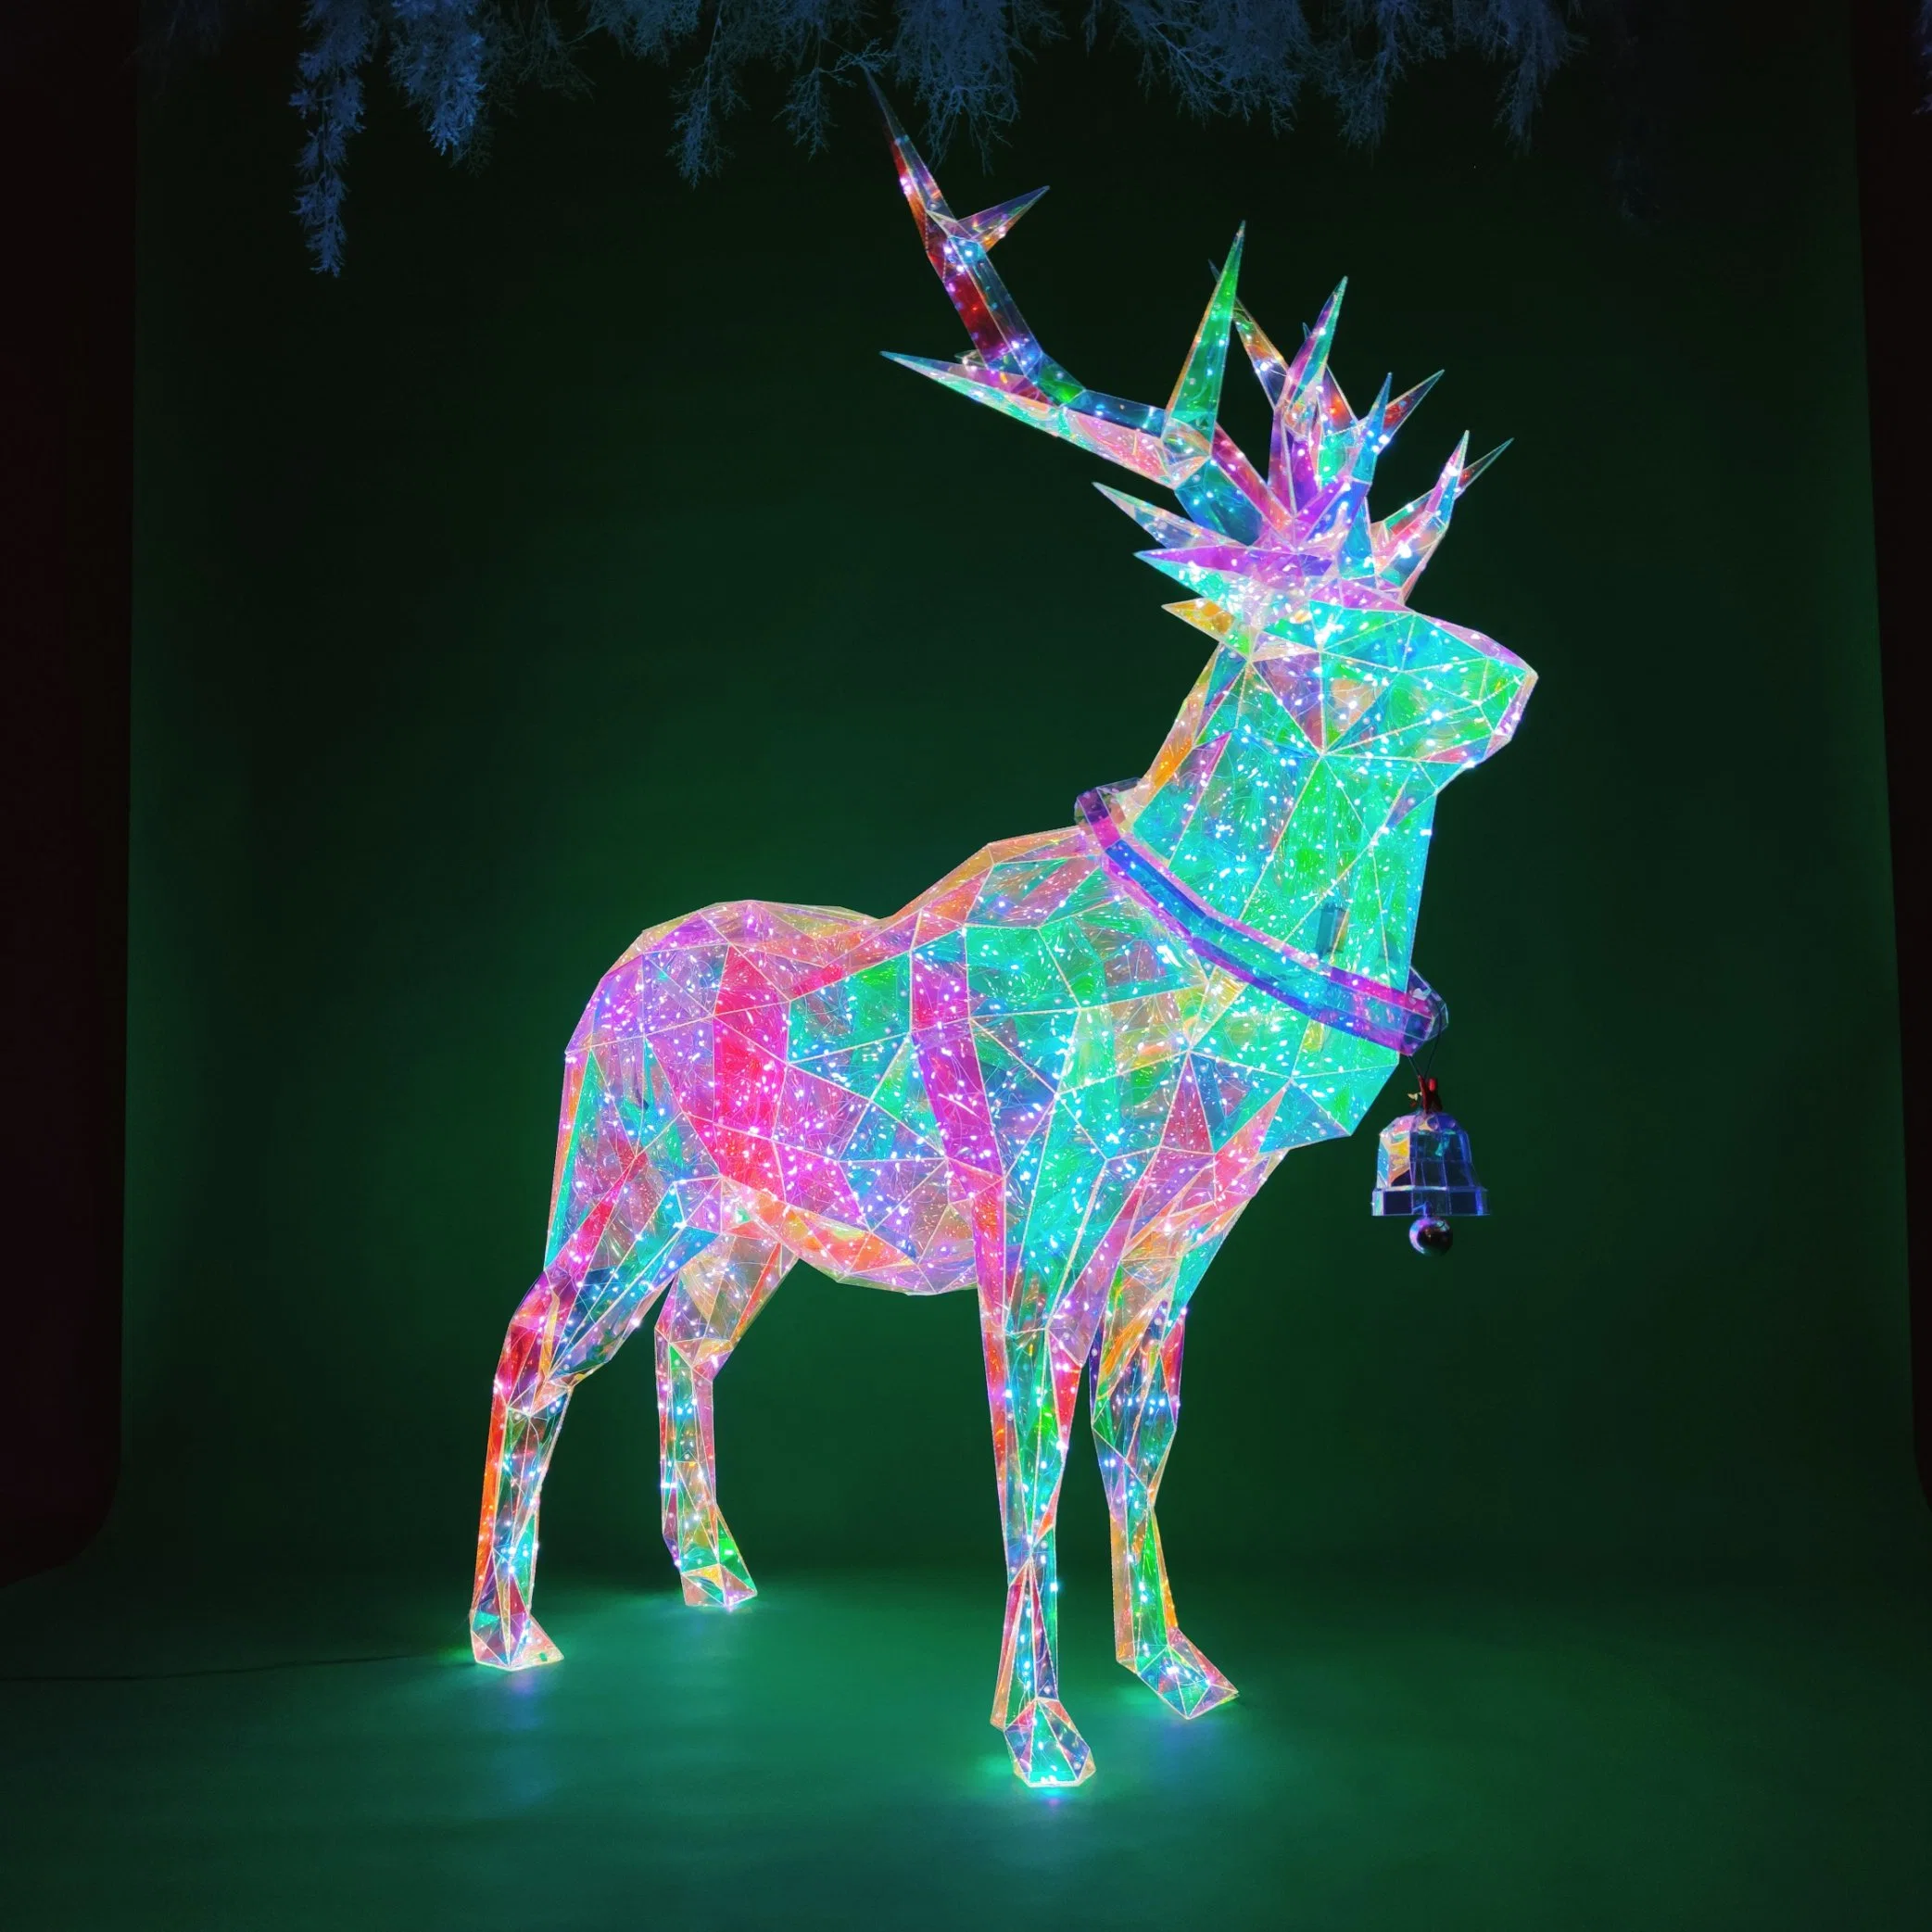 Deer LED lights عروض عيد الميلاد الحيّة 3D عيد الميلاد إضاءة عيد الميلاد 3D إضاءة LED خارجية للزينة